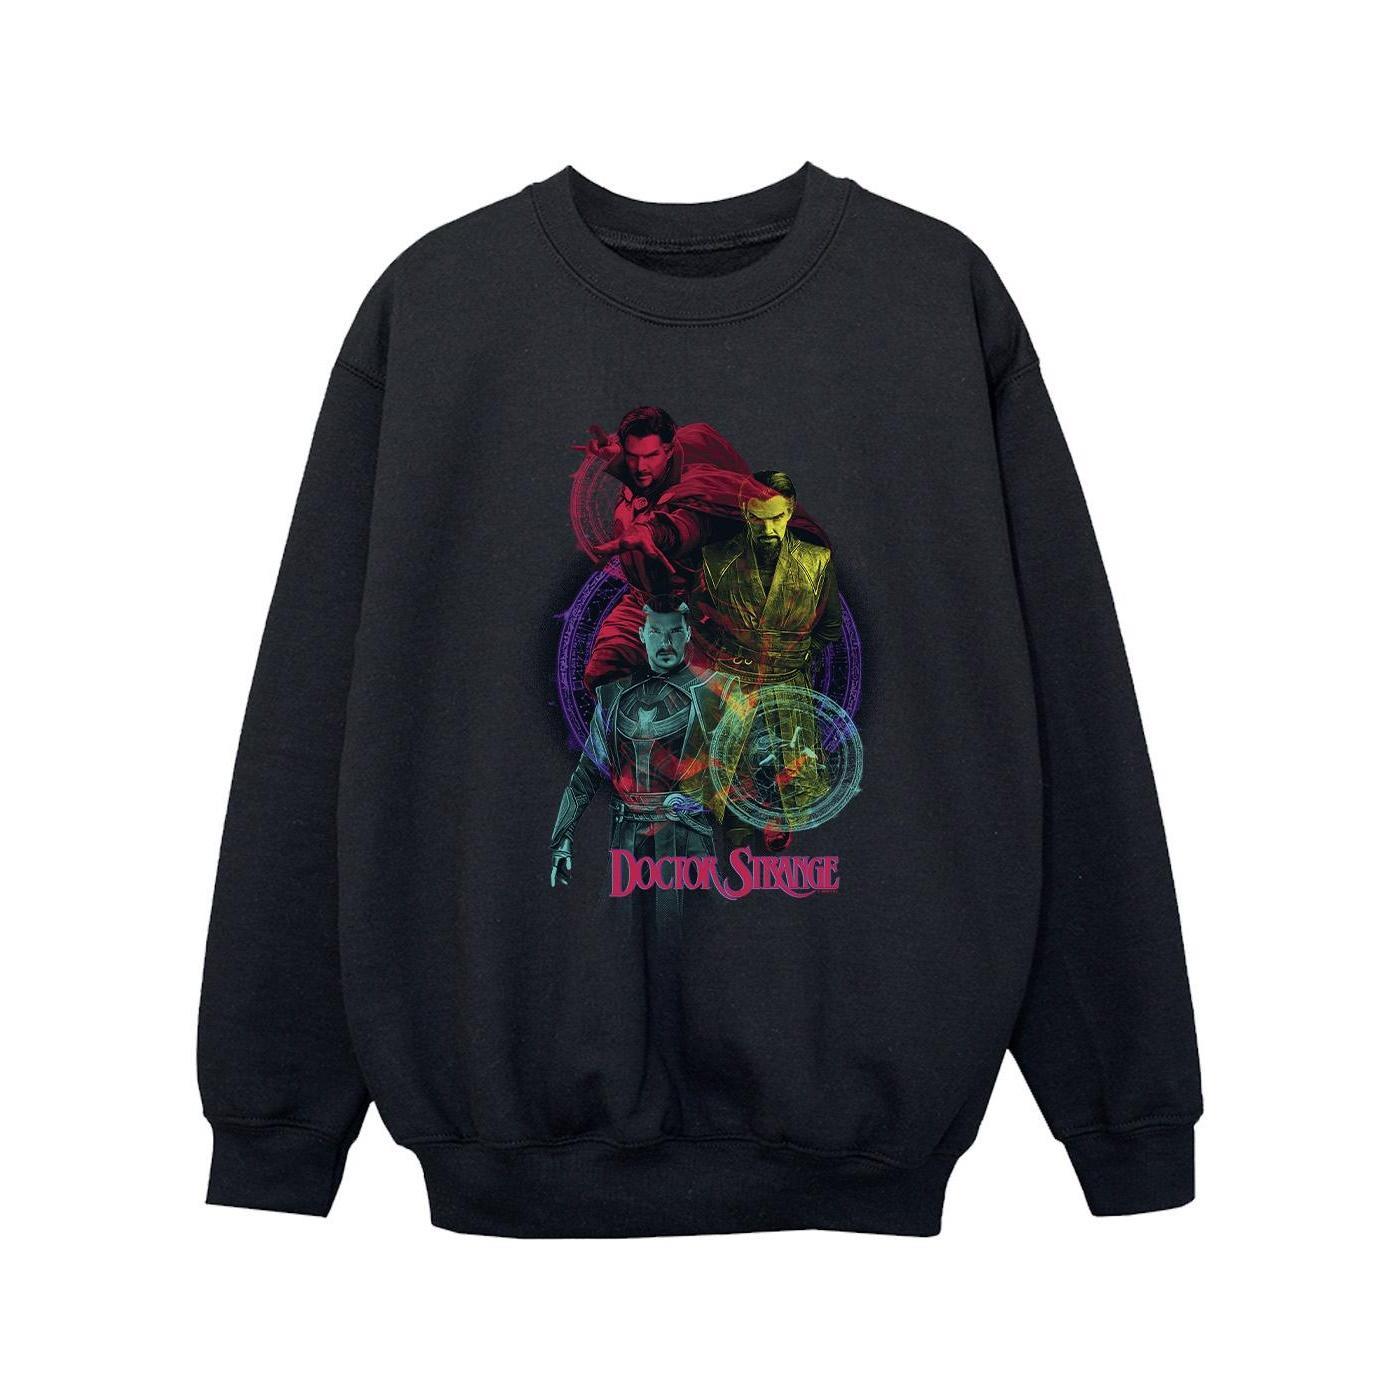 Marvel Girls Doctor Strange Rainbow Sweatshirt (Black) (7-8 Years)